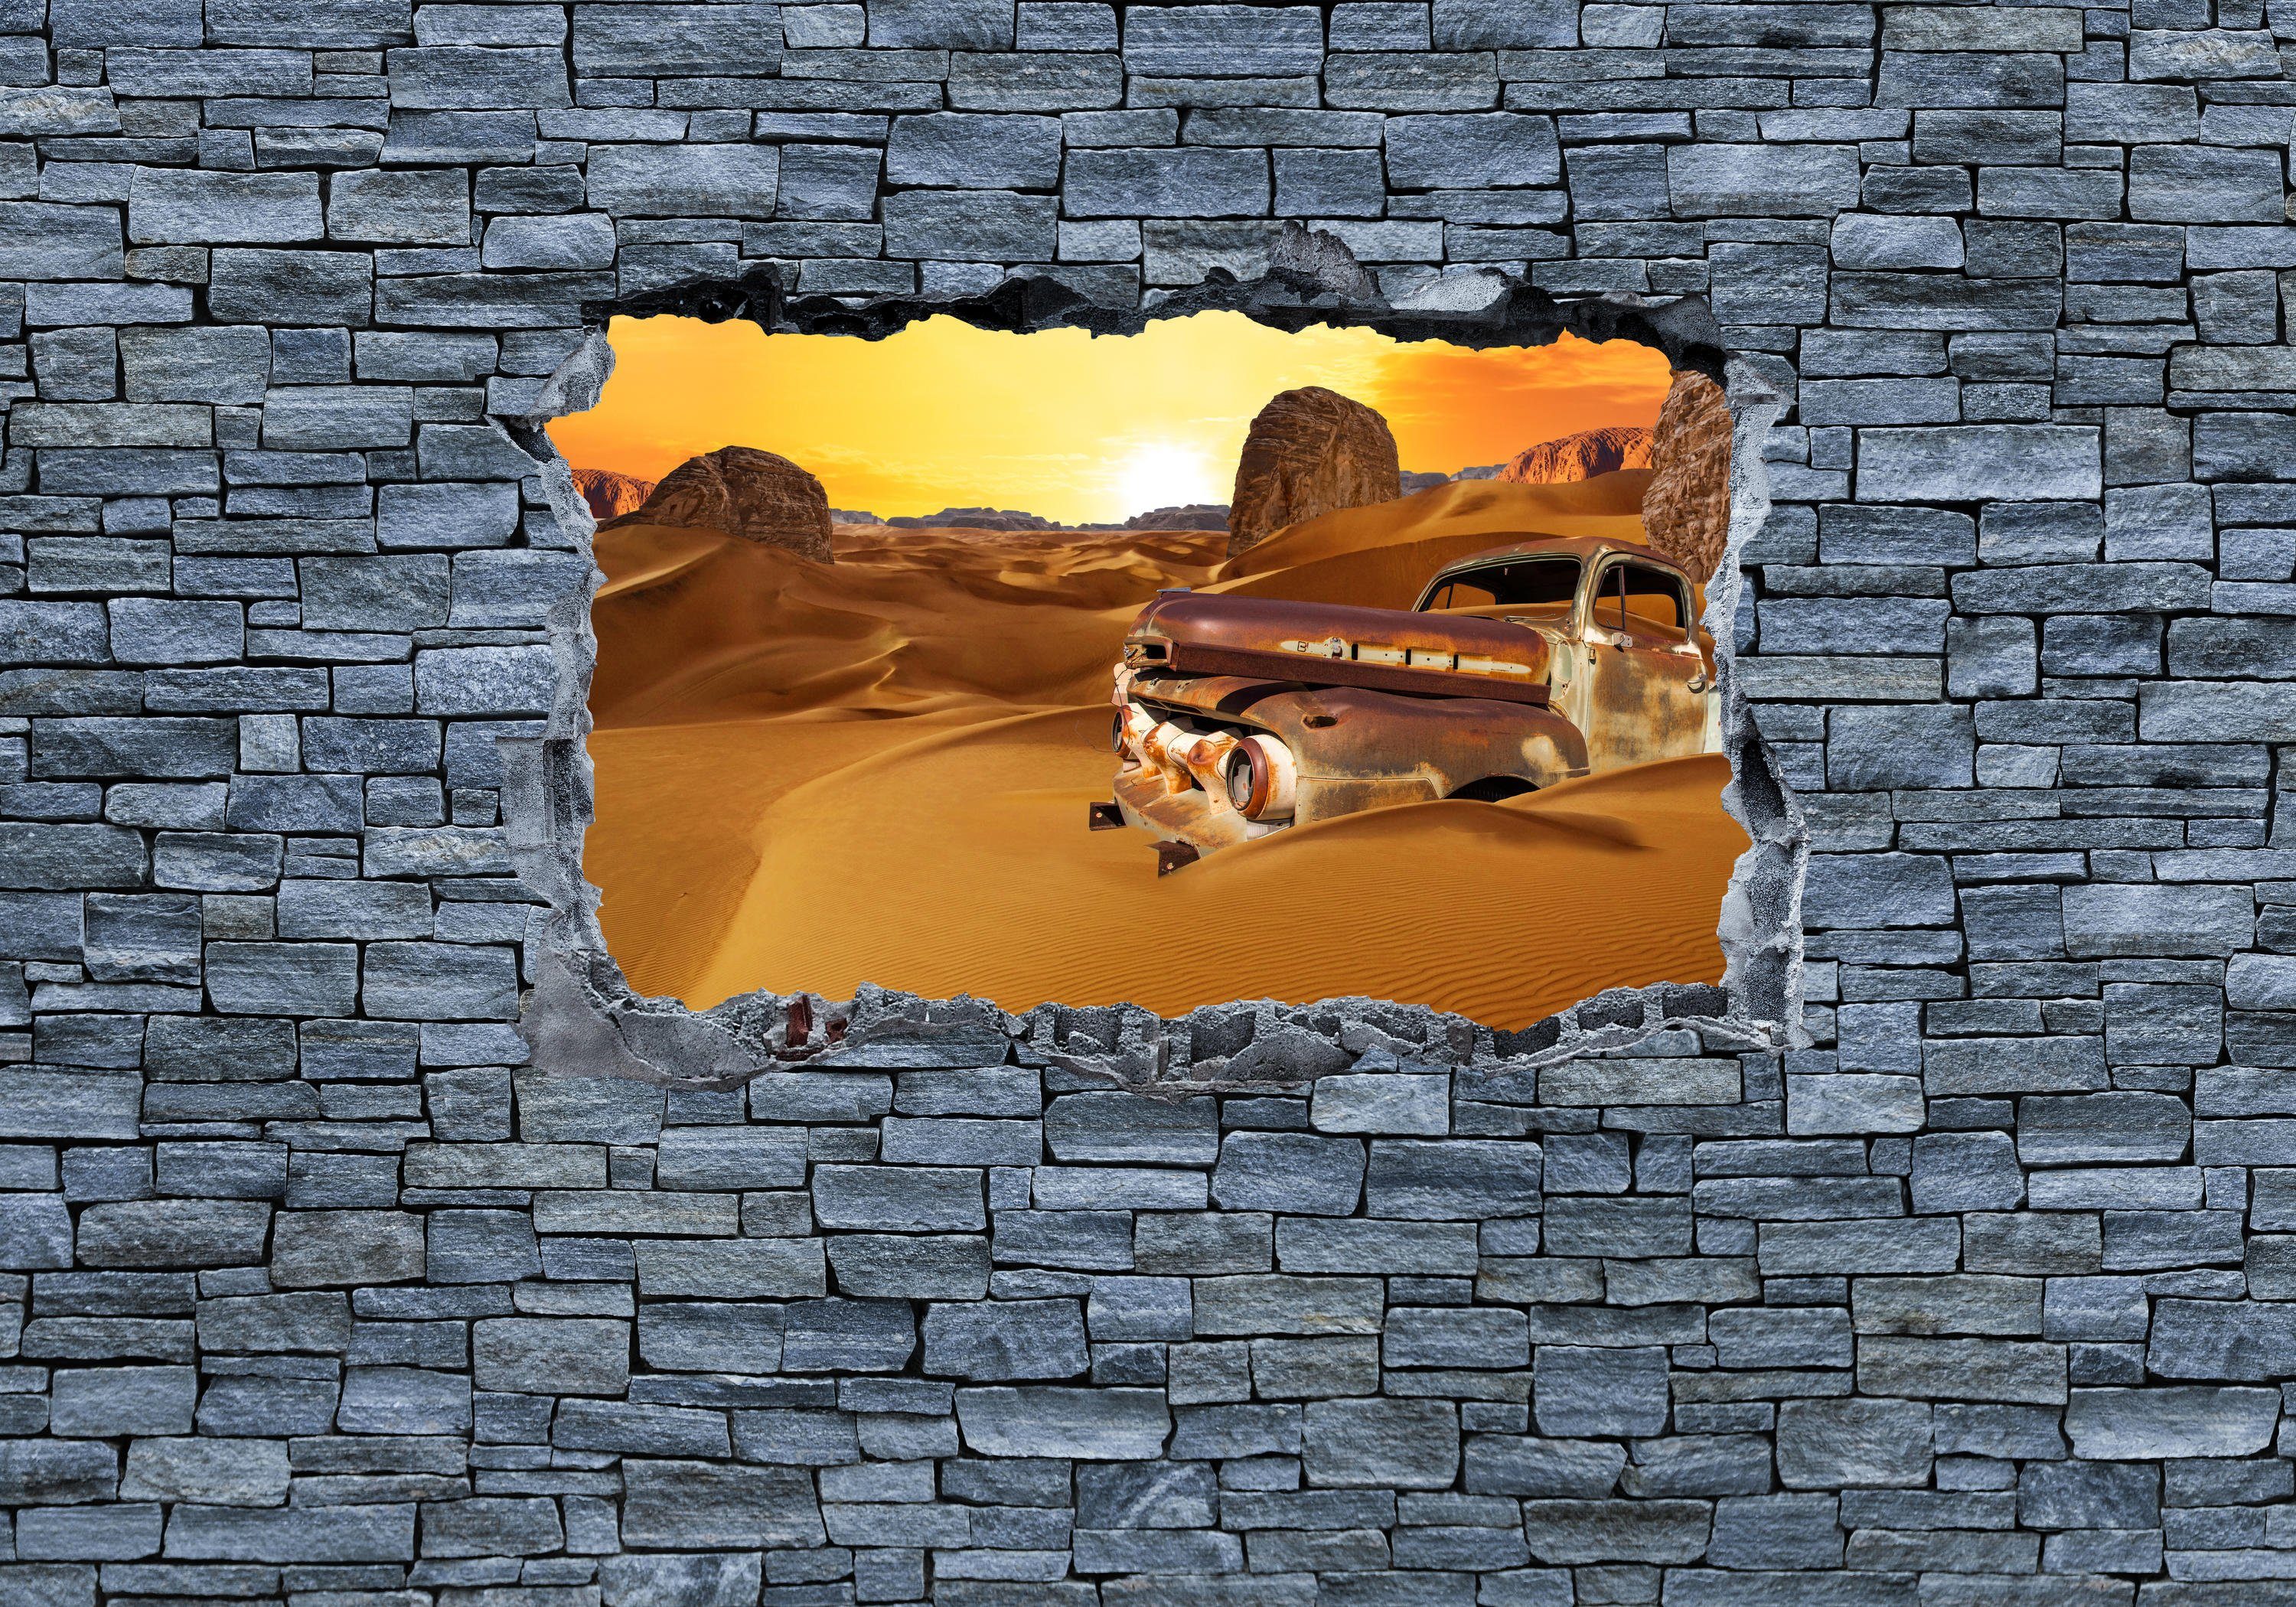 Wüste- Altes der Auto wandmotiv24 matt, in grobe glatt, Steinmauer, 3D Vliestapete Motivtapete, Wandtapete, Fototapete